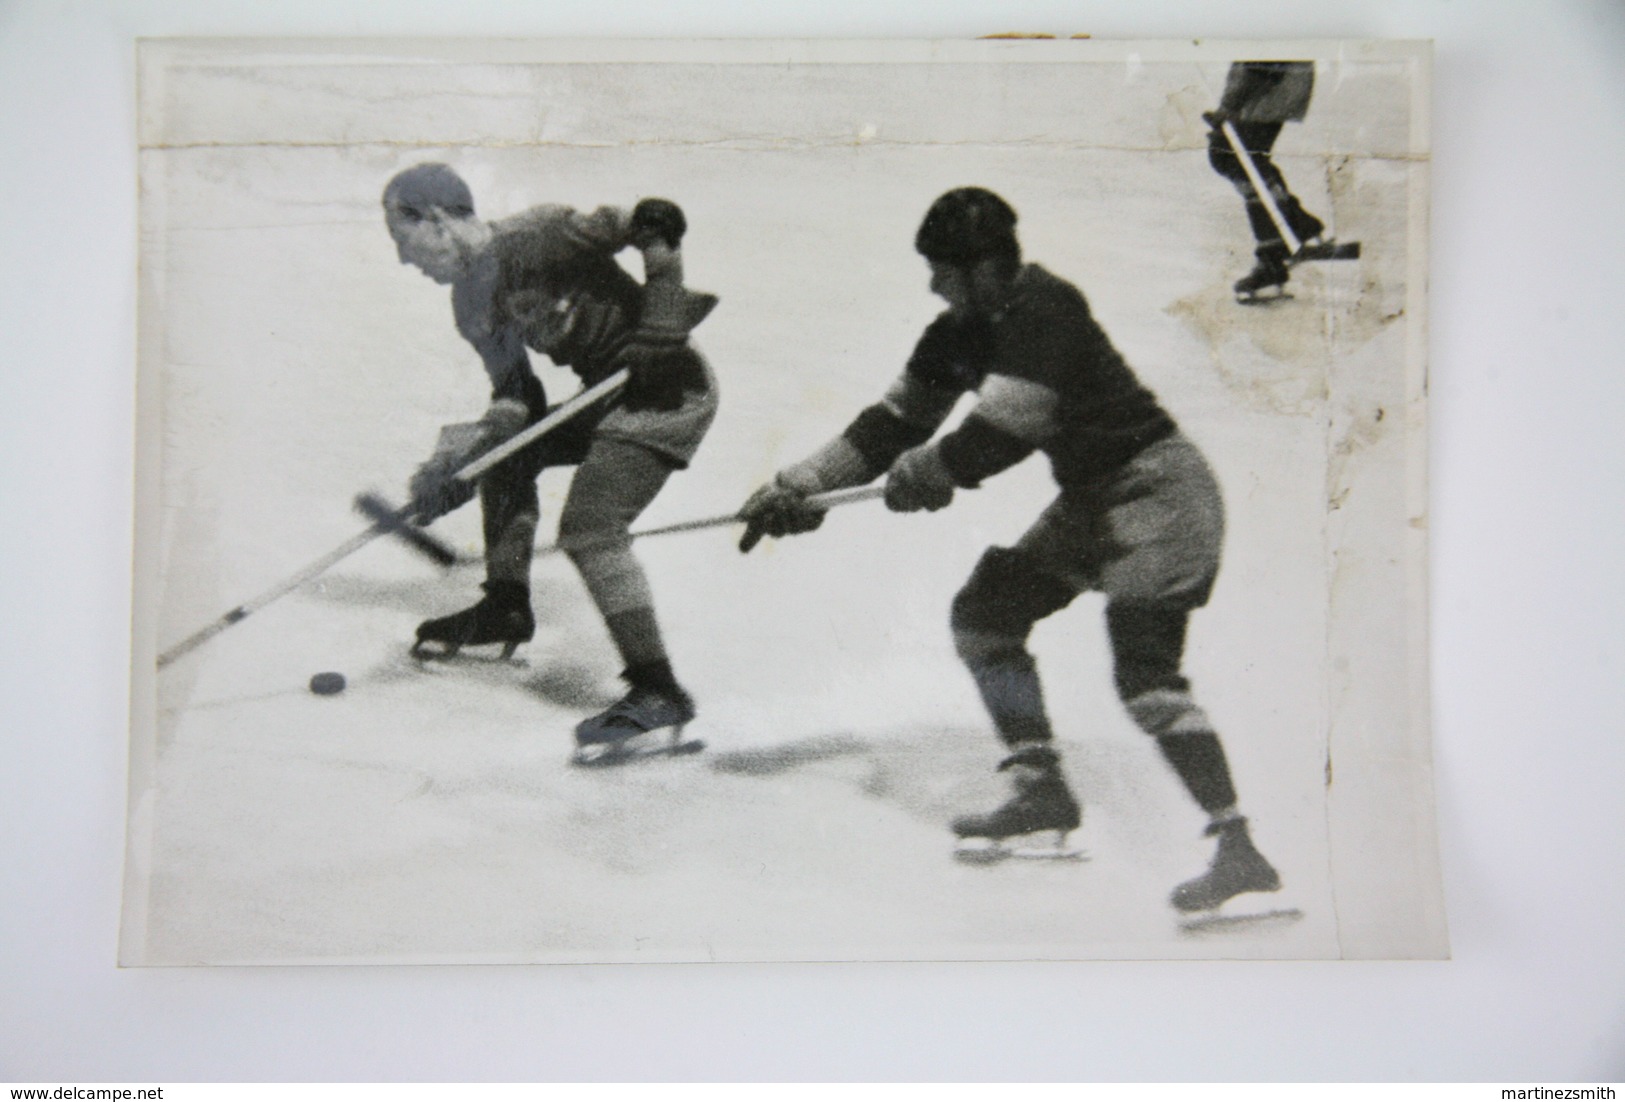 1942 Ice Hockey Official Press Photo - Match Stockholm Vs Berlin - Wintersport